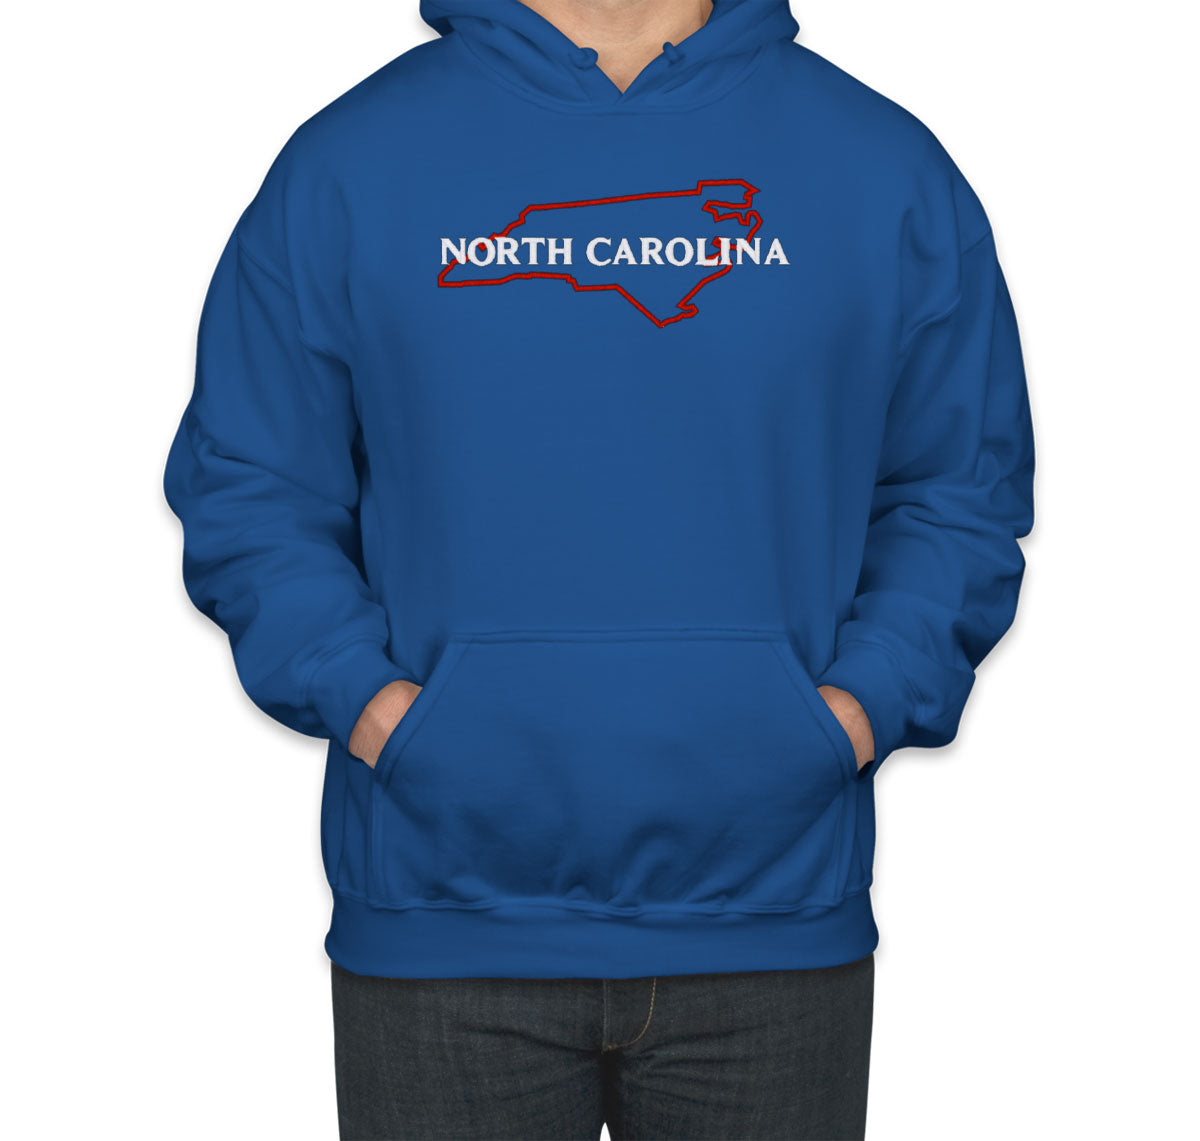 North Carolina Embroidered Unisex Hoodie